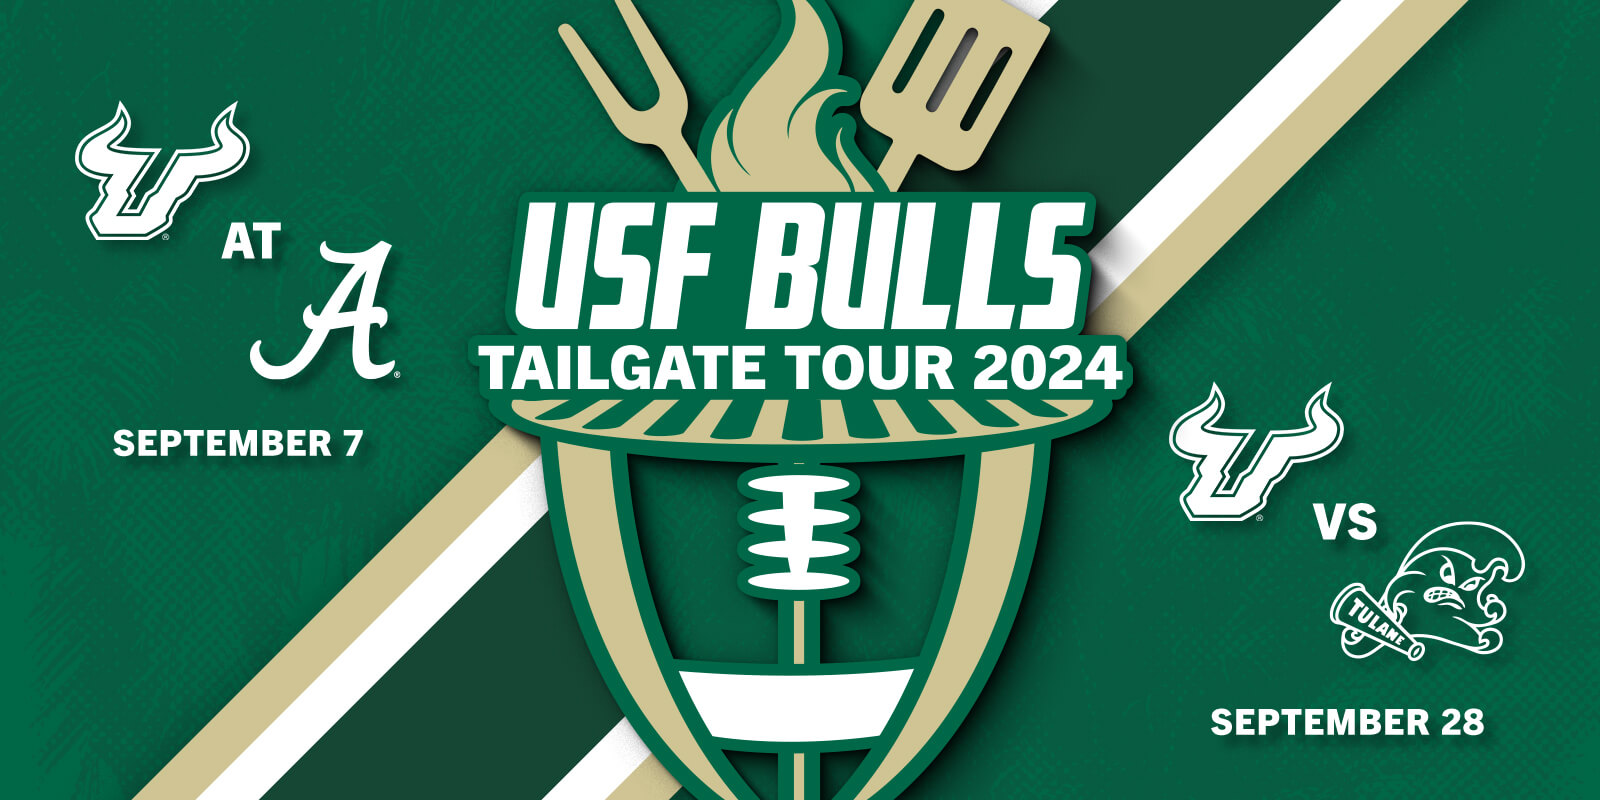 USF Bulls Tailgate Tour 2024